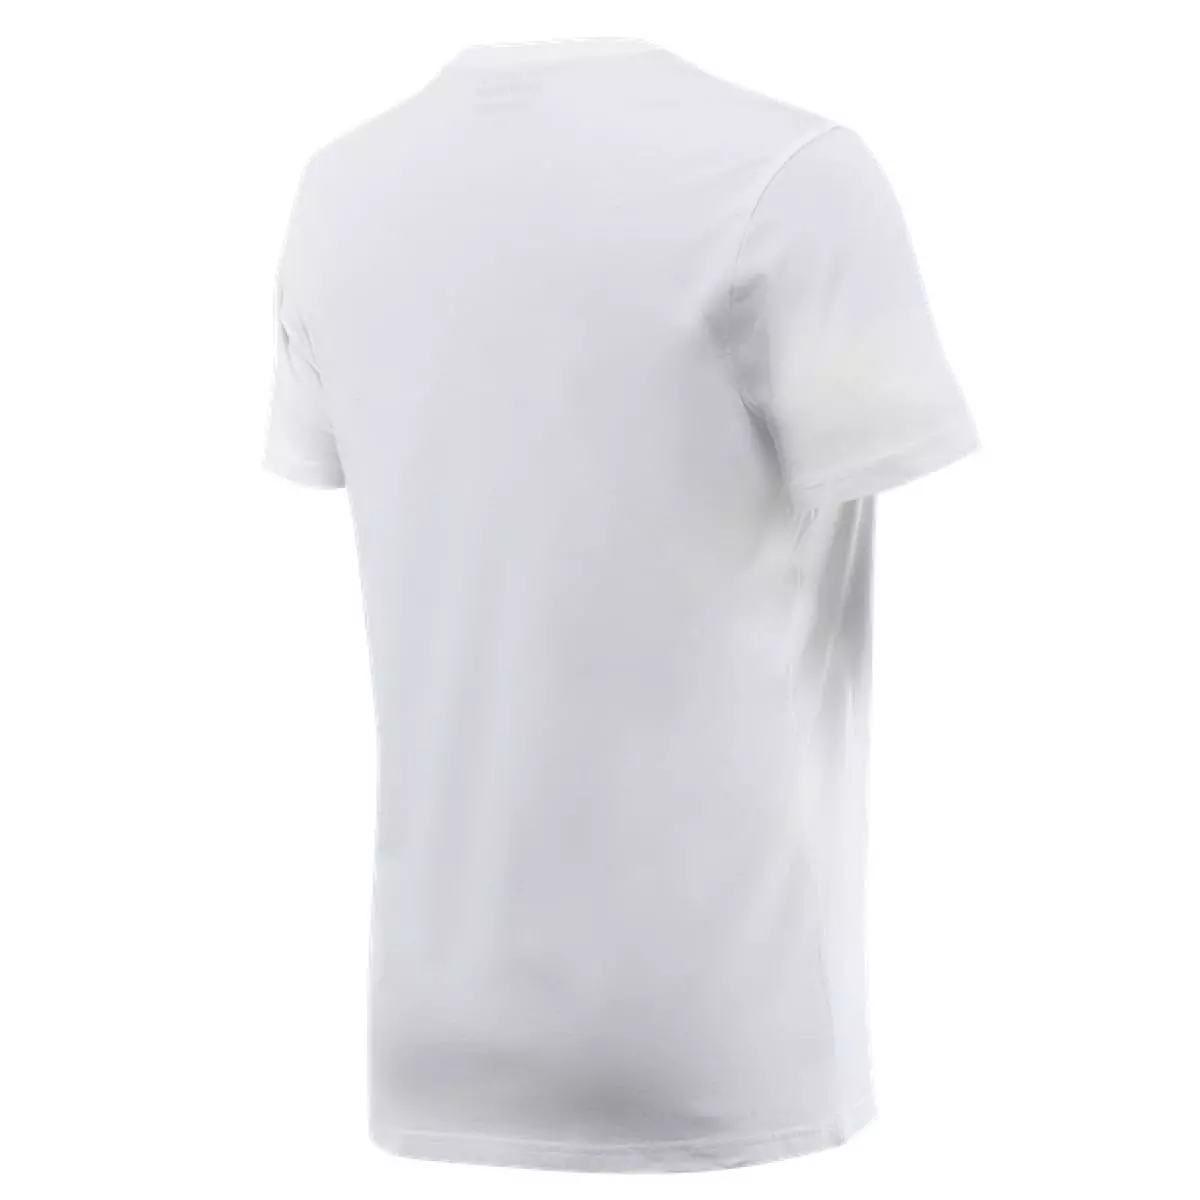 Dainese T-shirt Dainese Stripes en coton blanc rouge 